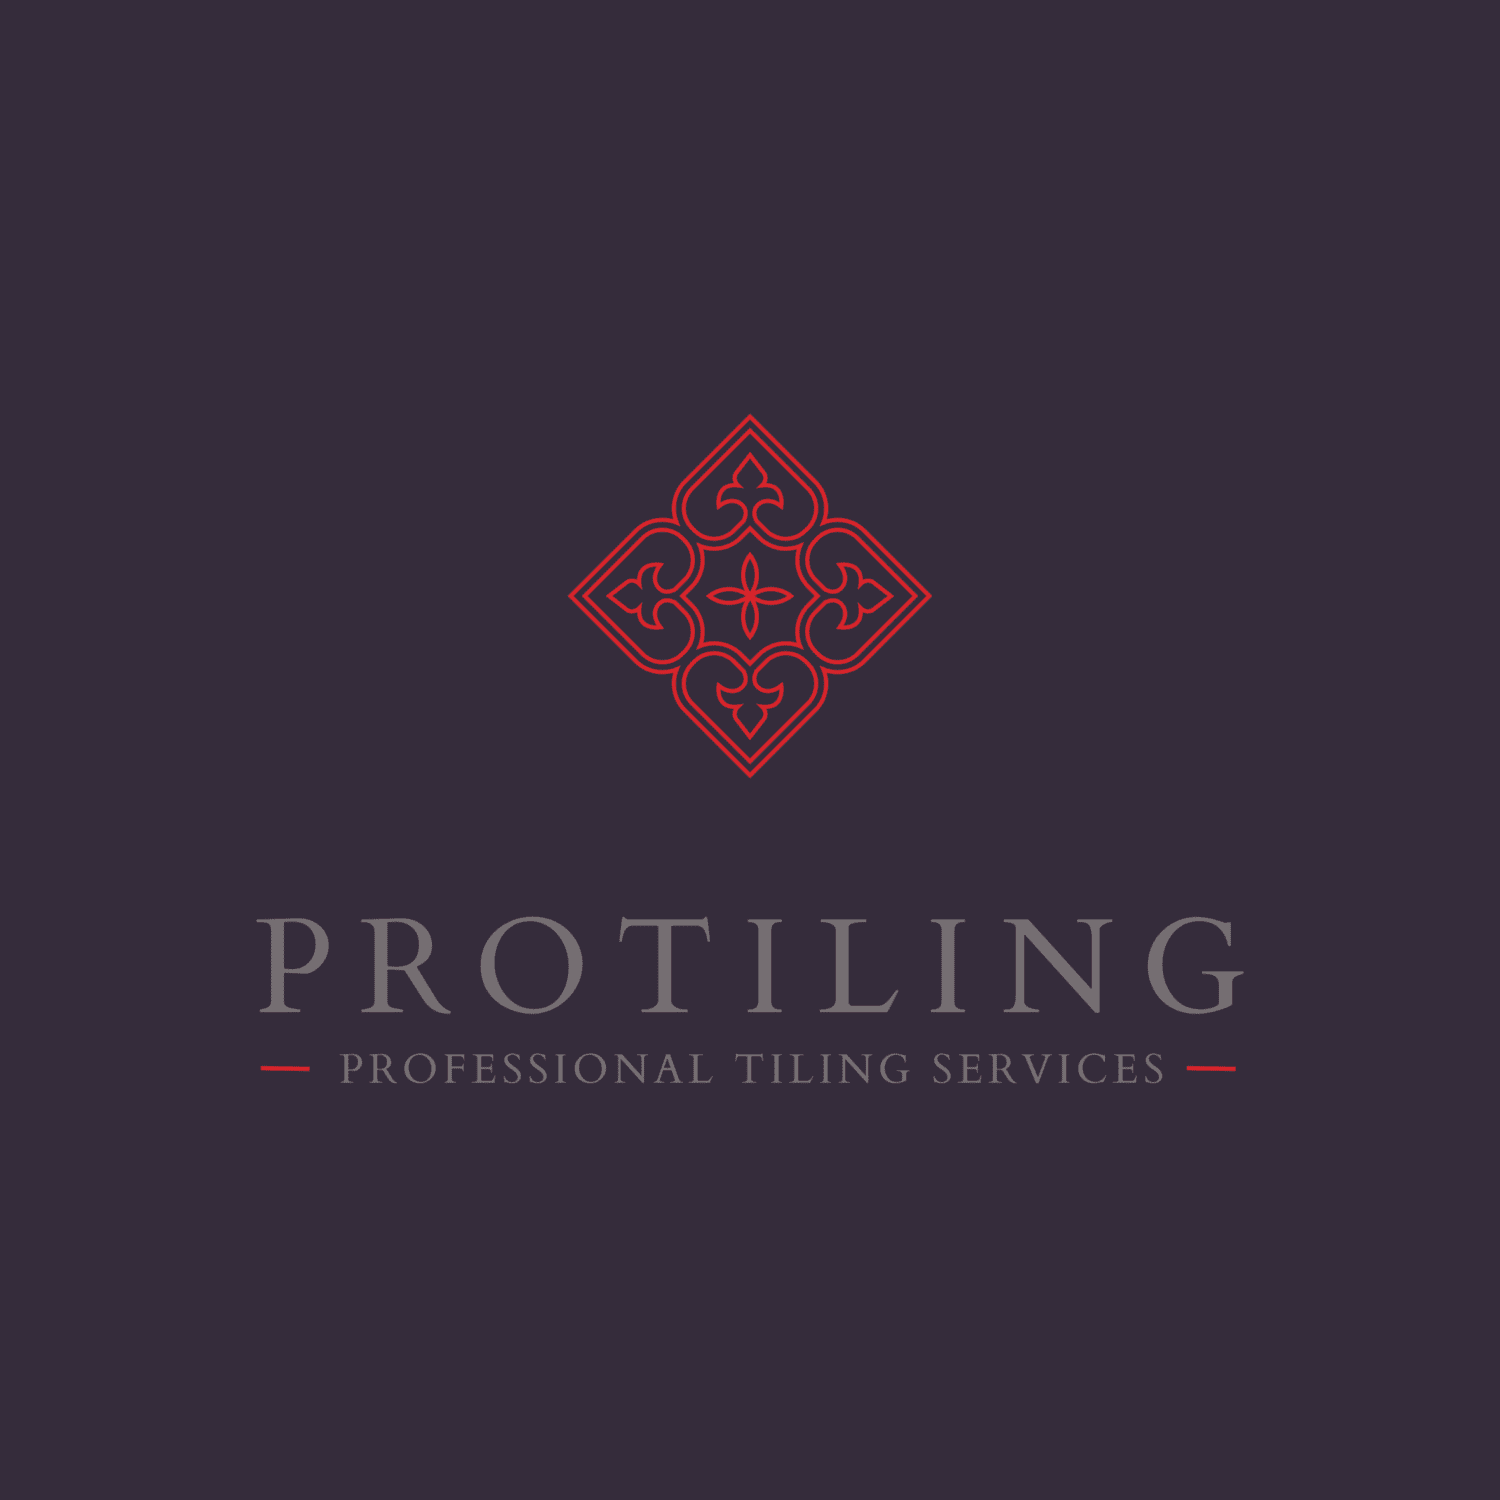 Protiling logo